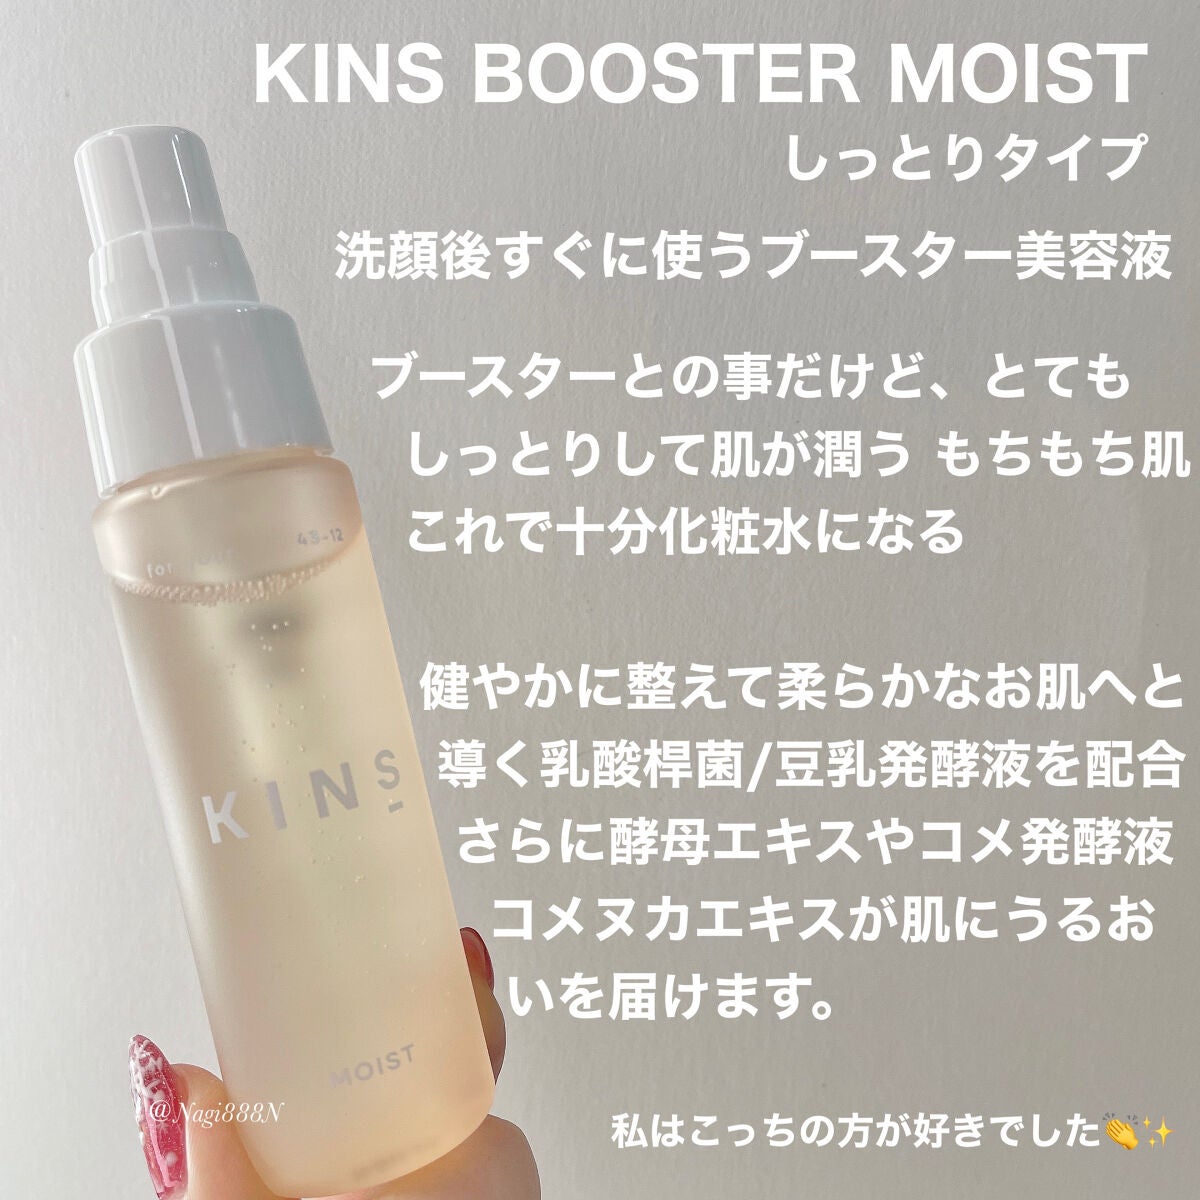 KINSのスキンケア・基礎化粧品 BOOSTER他、3商品を使った口コミ -KINS ...